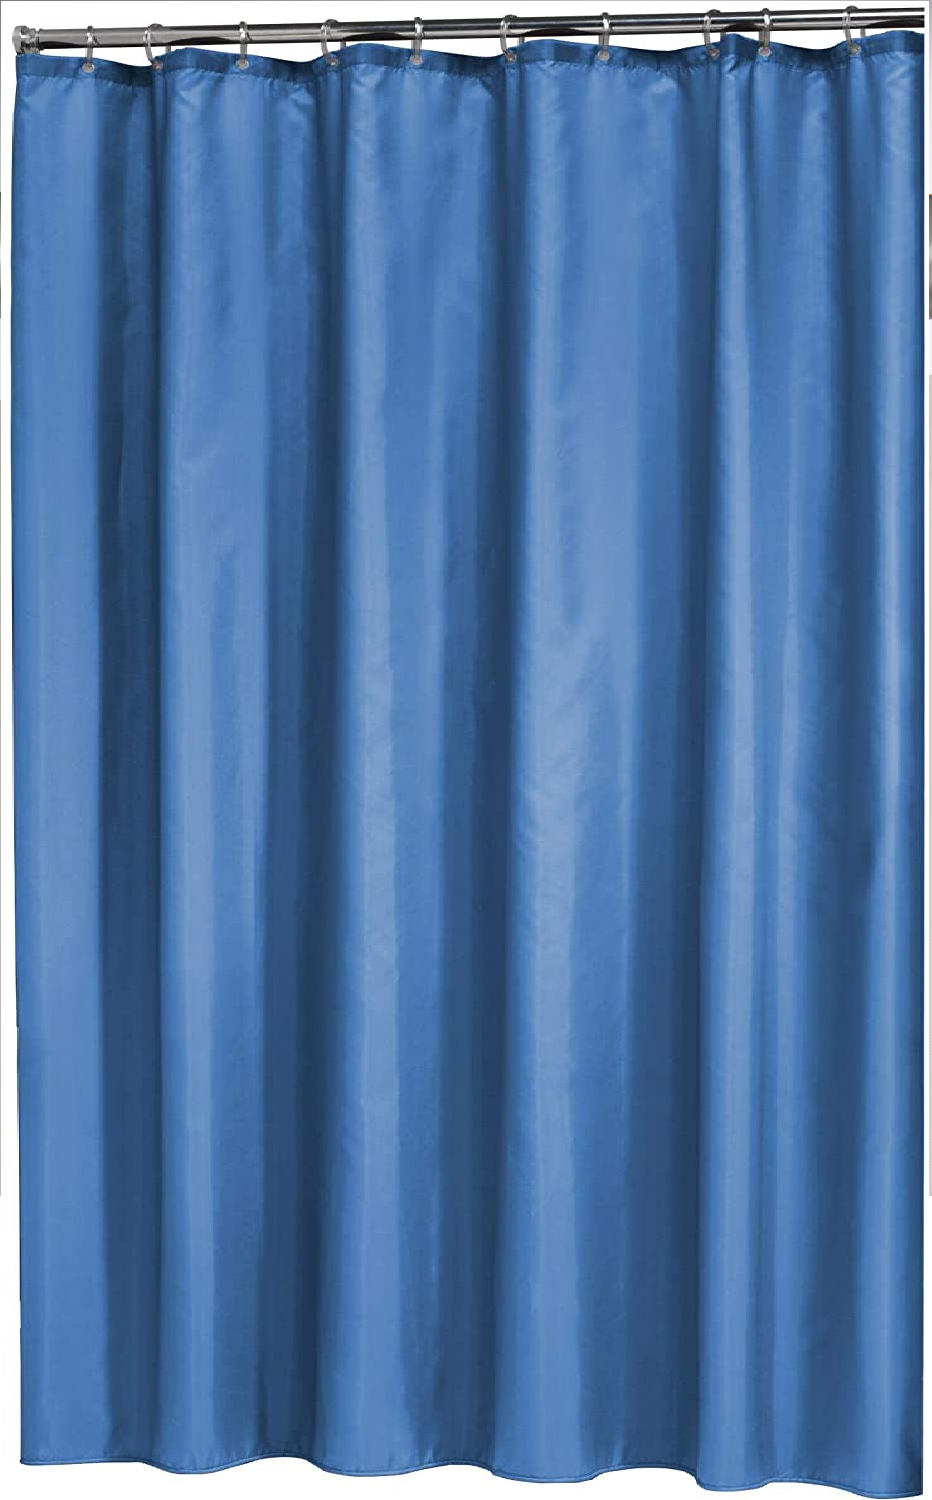 Textil Duschvorhang Madeira, Farbe: Blau, 240 x 200 cm